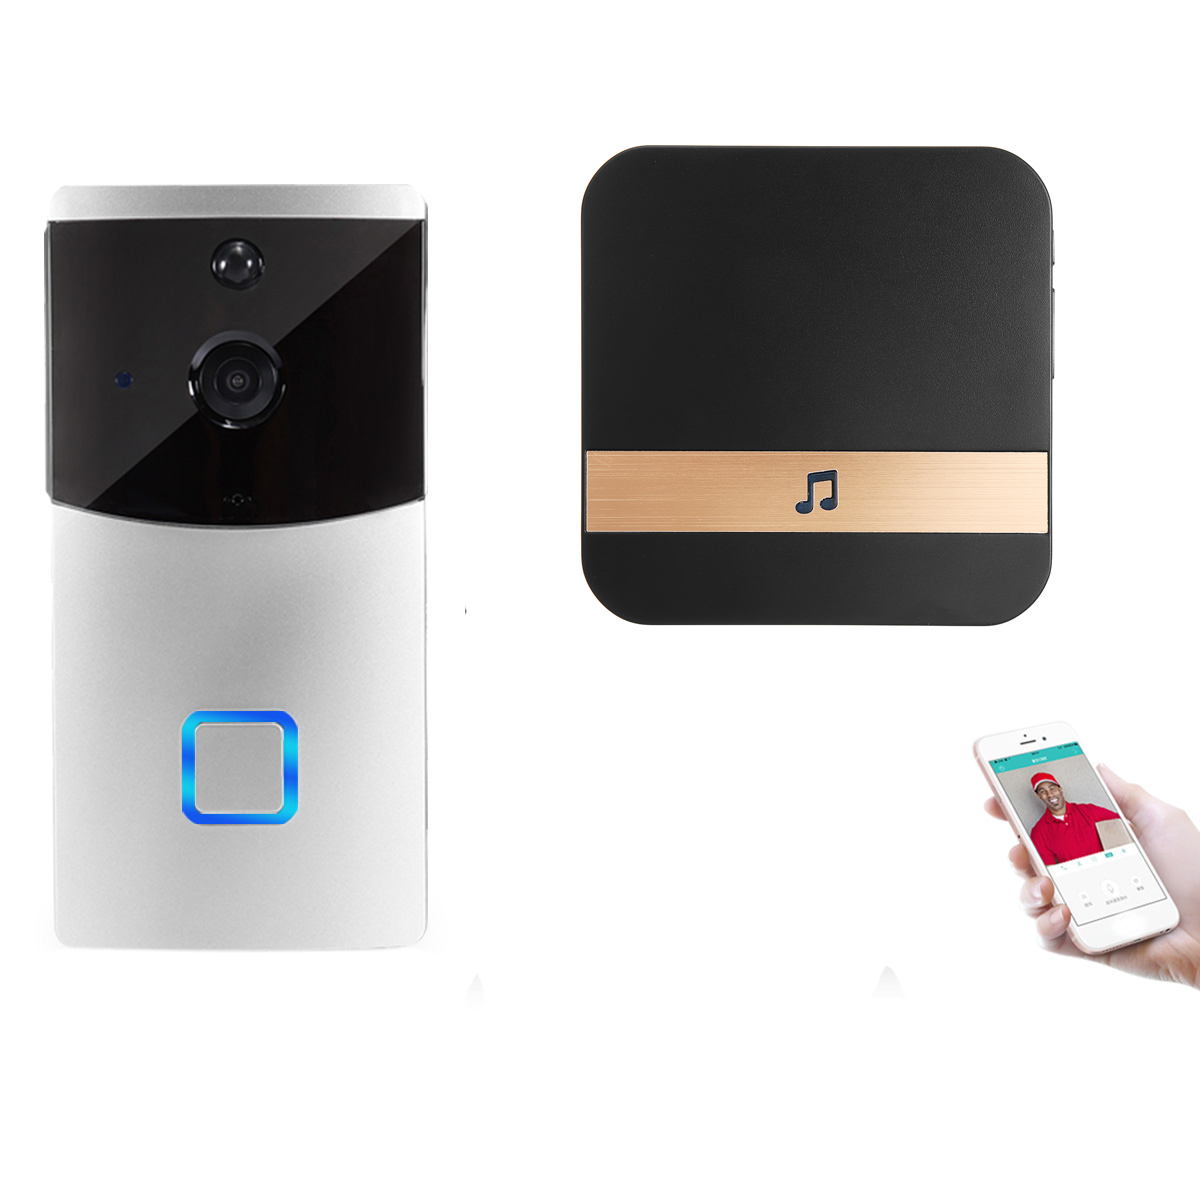 

Smart Video Wireless WiFi DoorBell IR Visual камера Record Домашняя система безопасности + Крытый Приемник